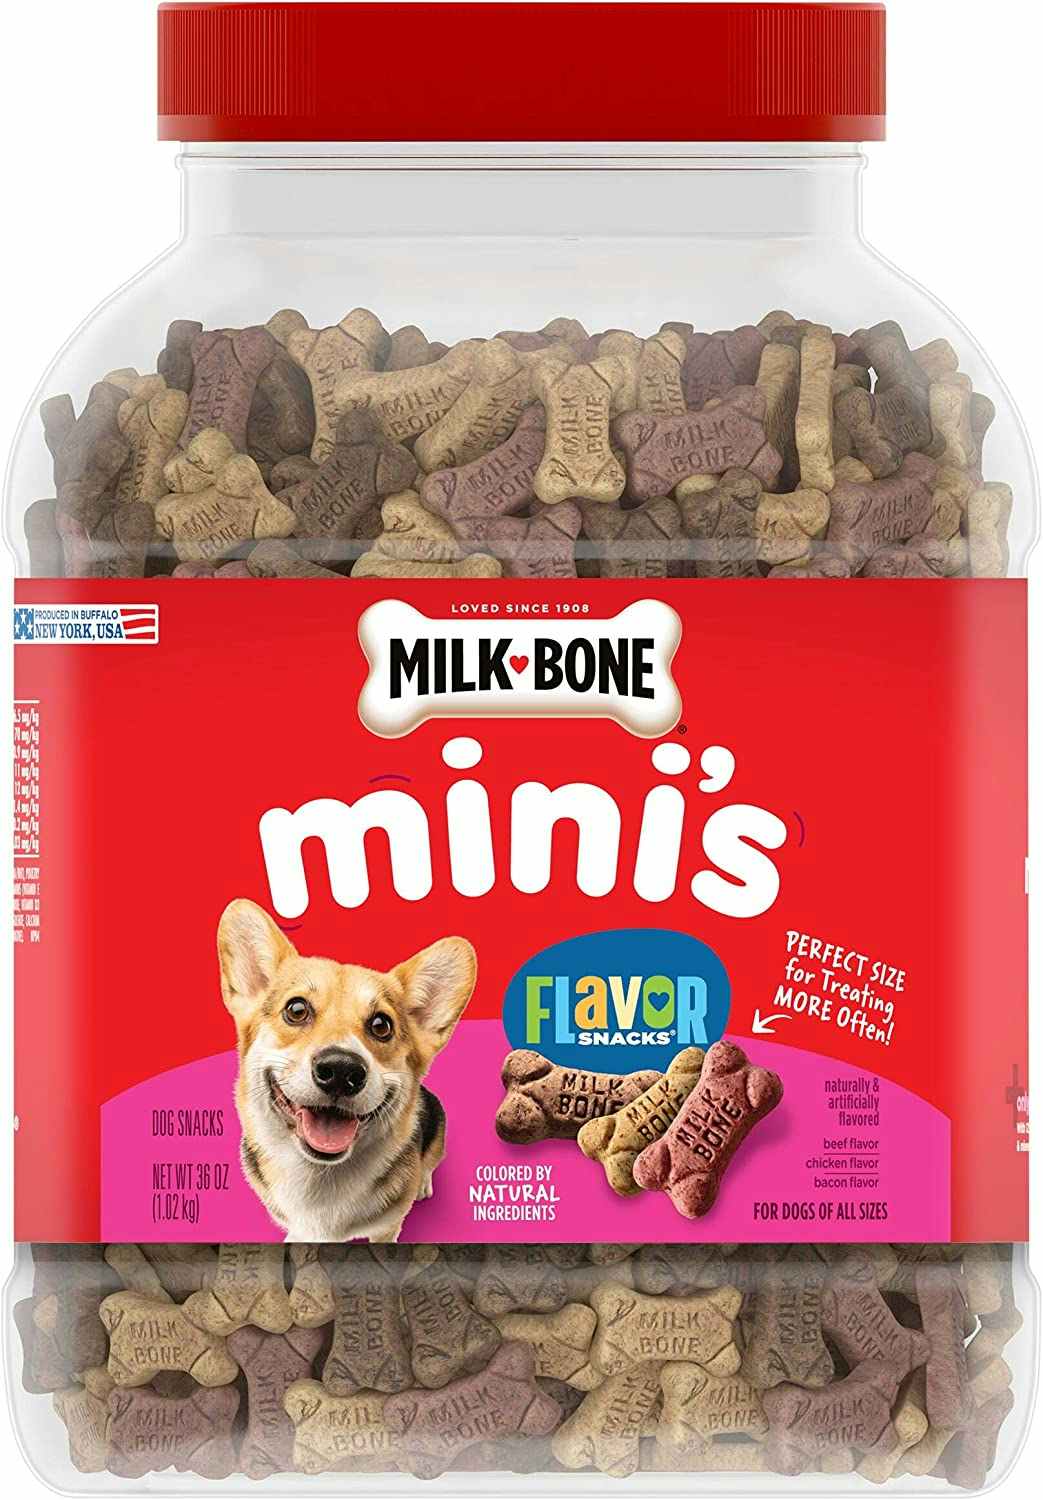 A container of Milk-Bone Mini's dog treats.